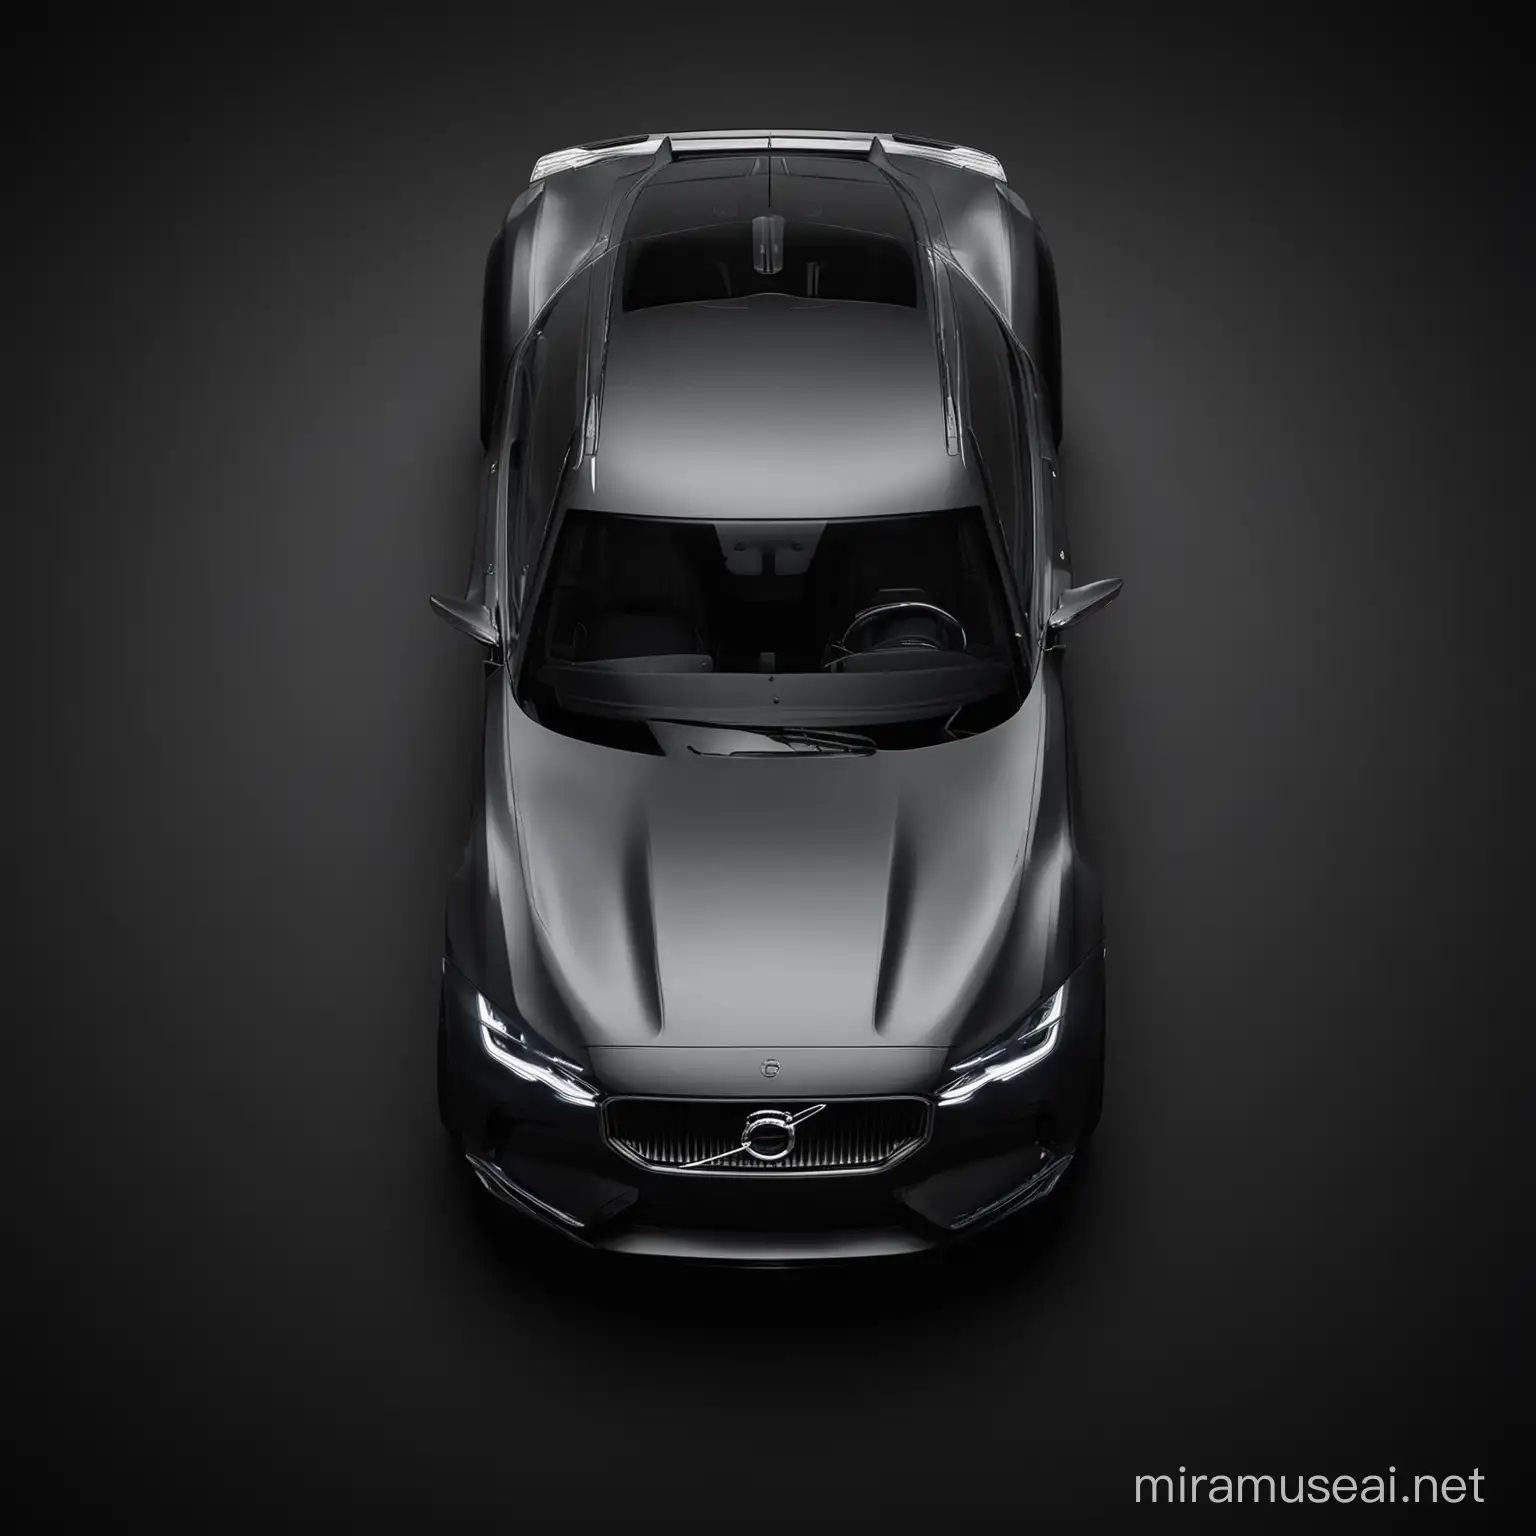 a futuristic volvo car design, all black background